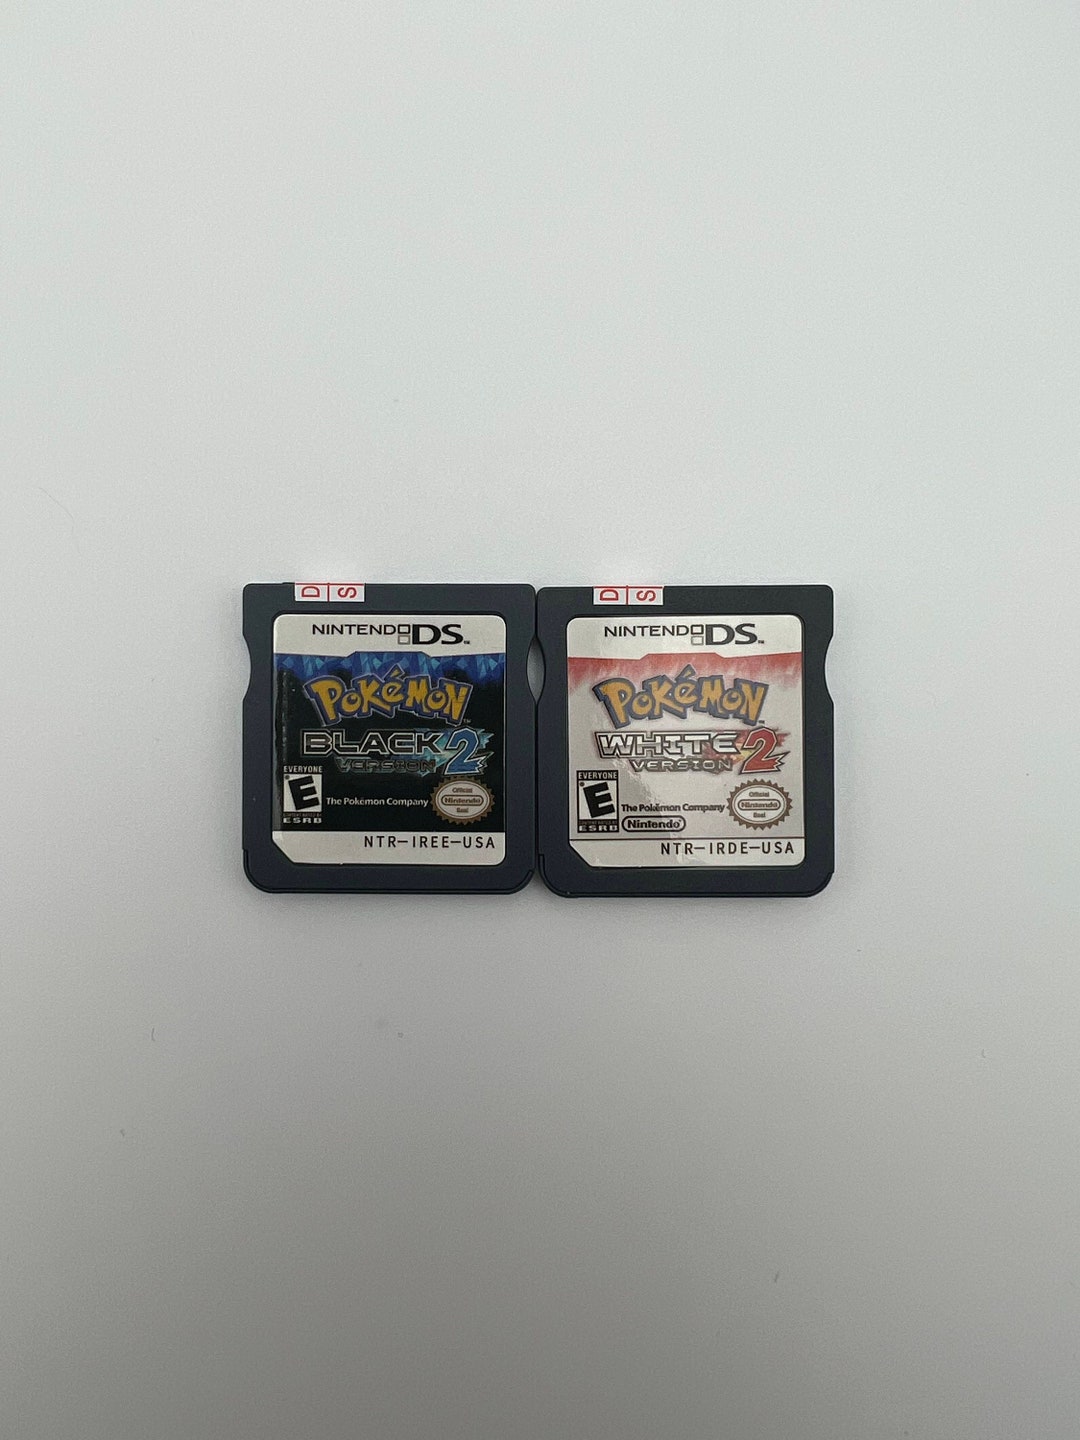 Tiny Cartridge 3DS — Comparing Pokemon Black and White